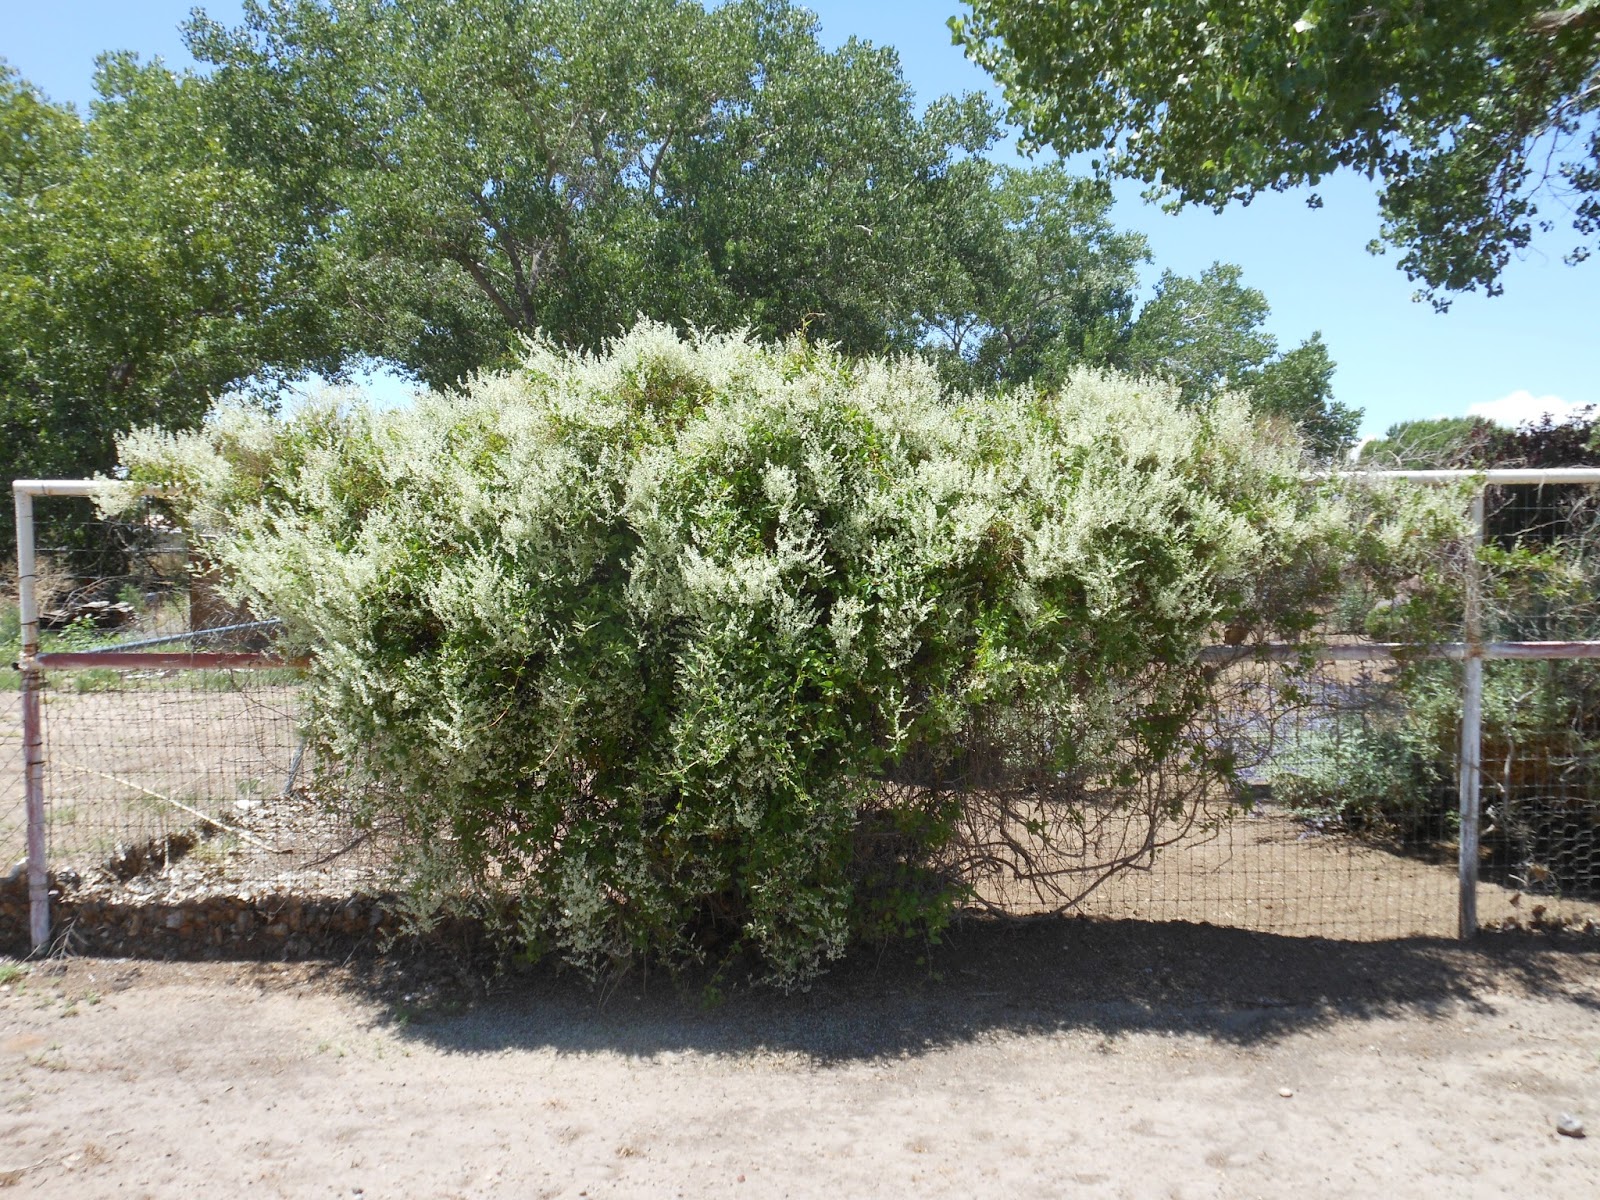 Texas Sage White Cloud Archives Ramblings From A Desert Garden